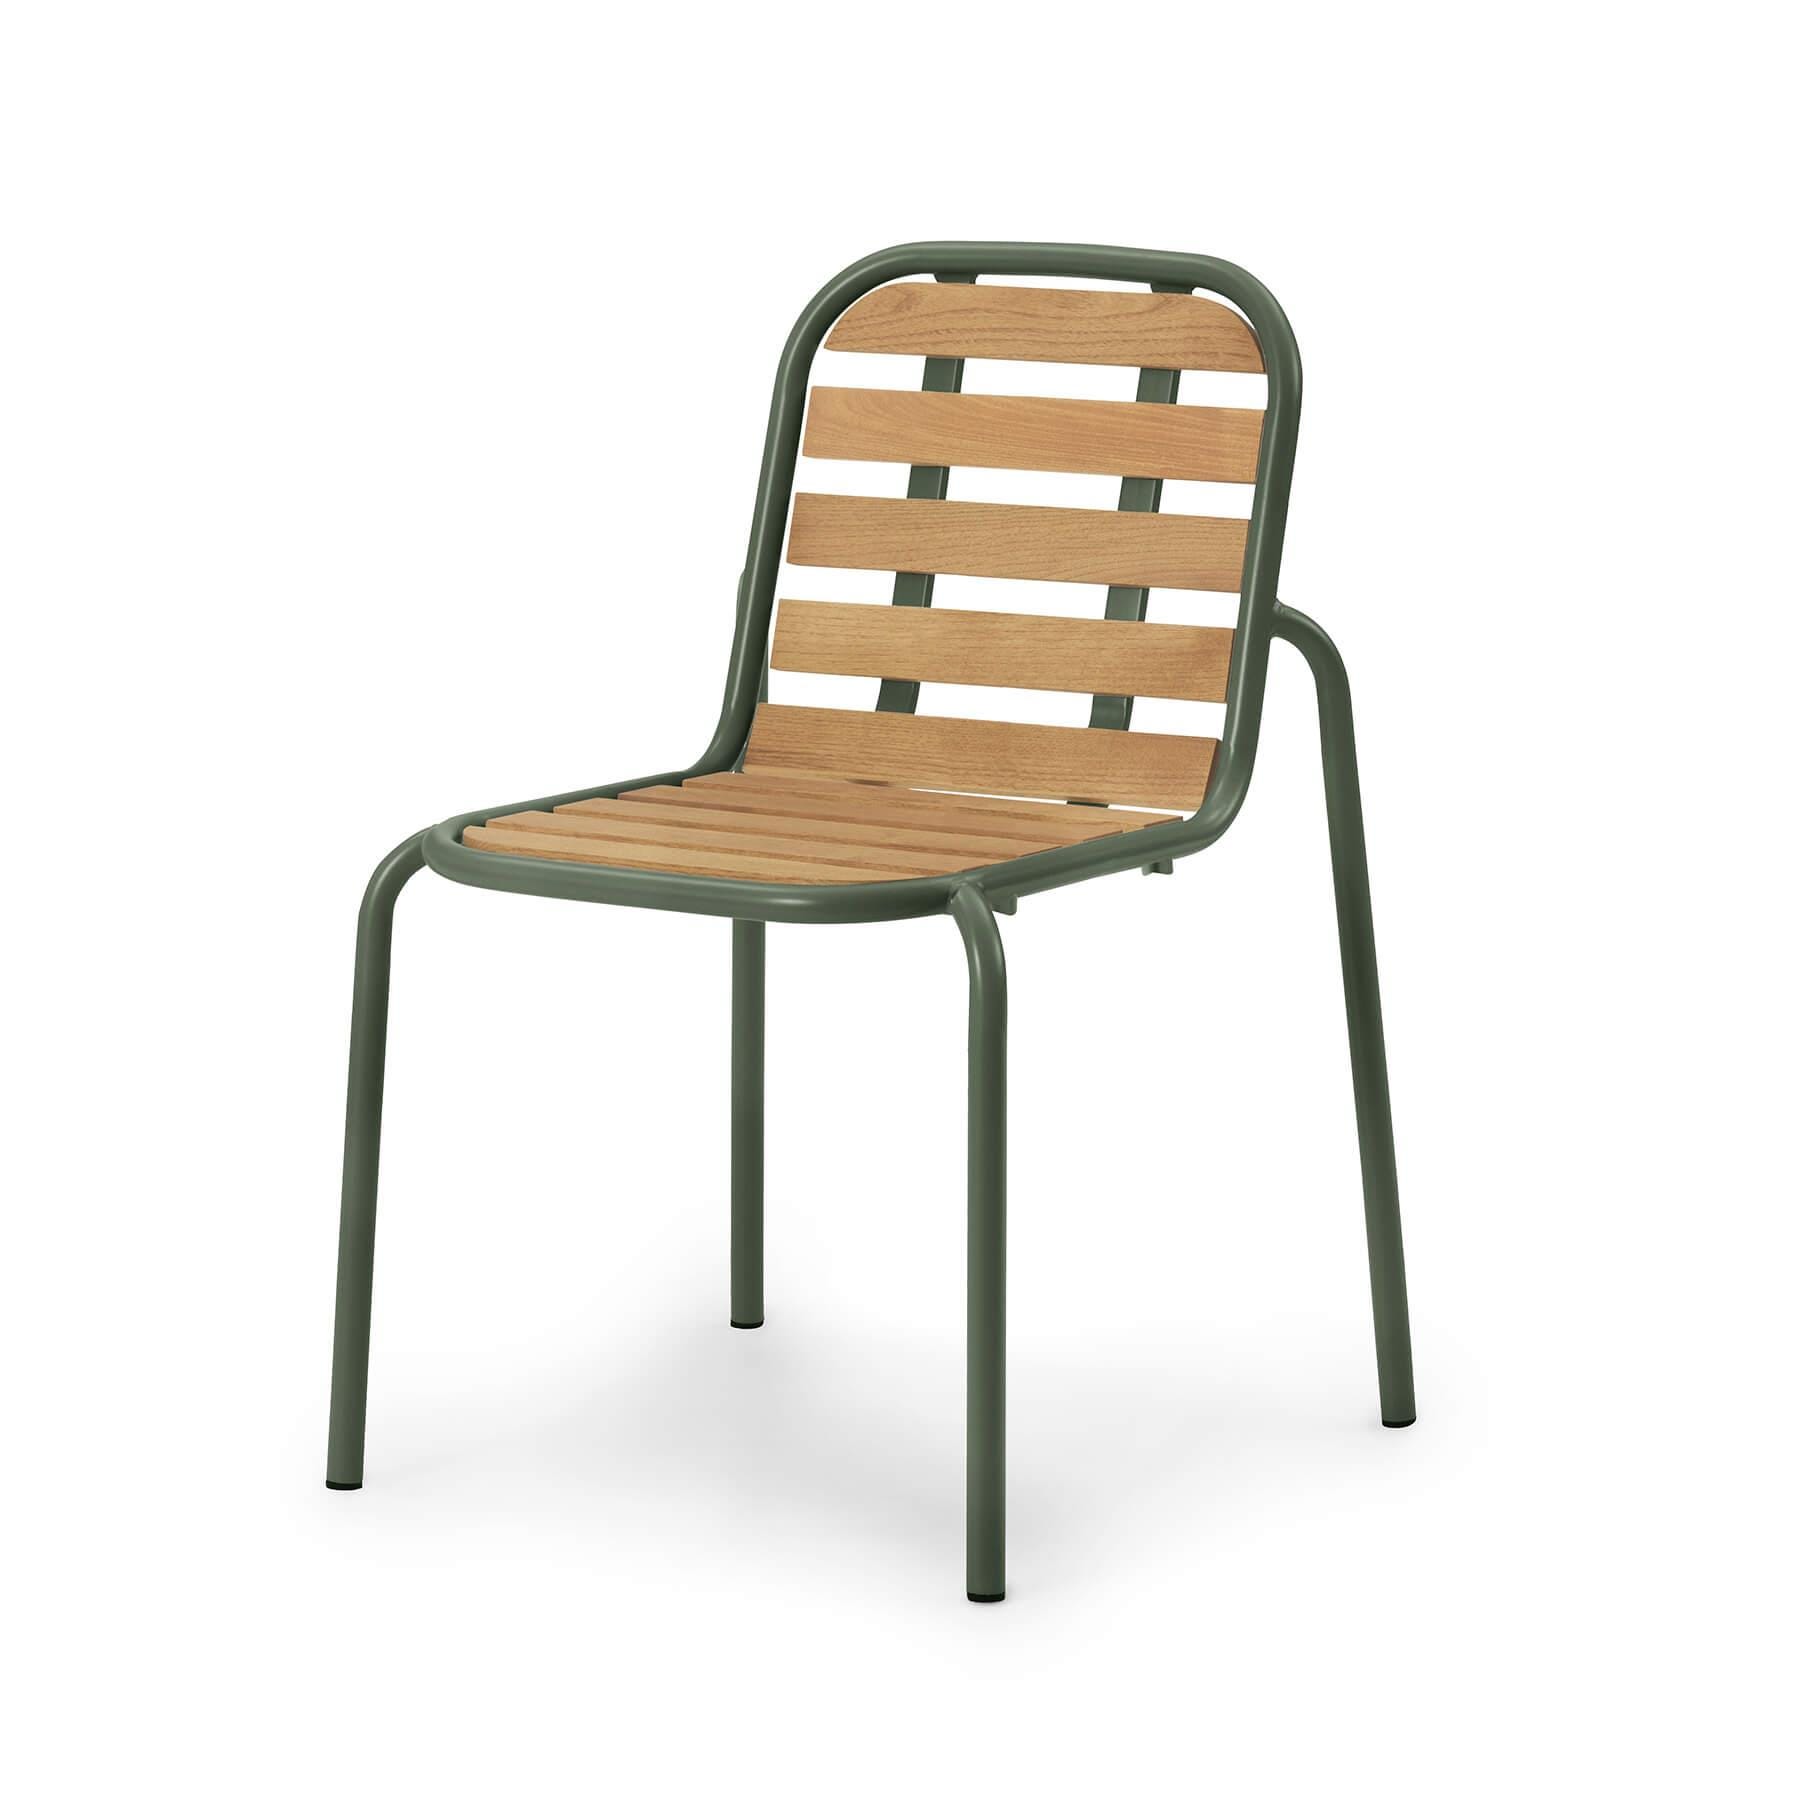 Normann Copenhagen Vig Wooden Garden Chair Green Designer Furniture From Holloways Of Ludlow